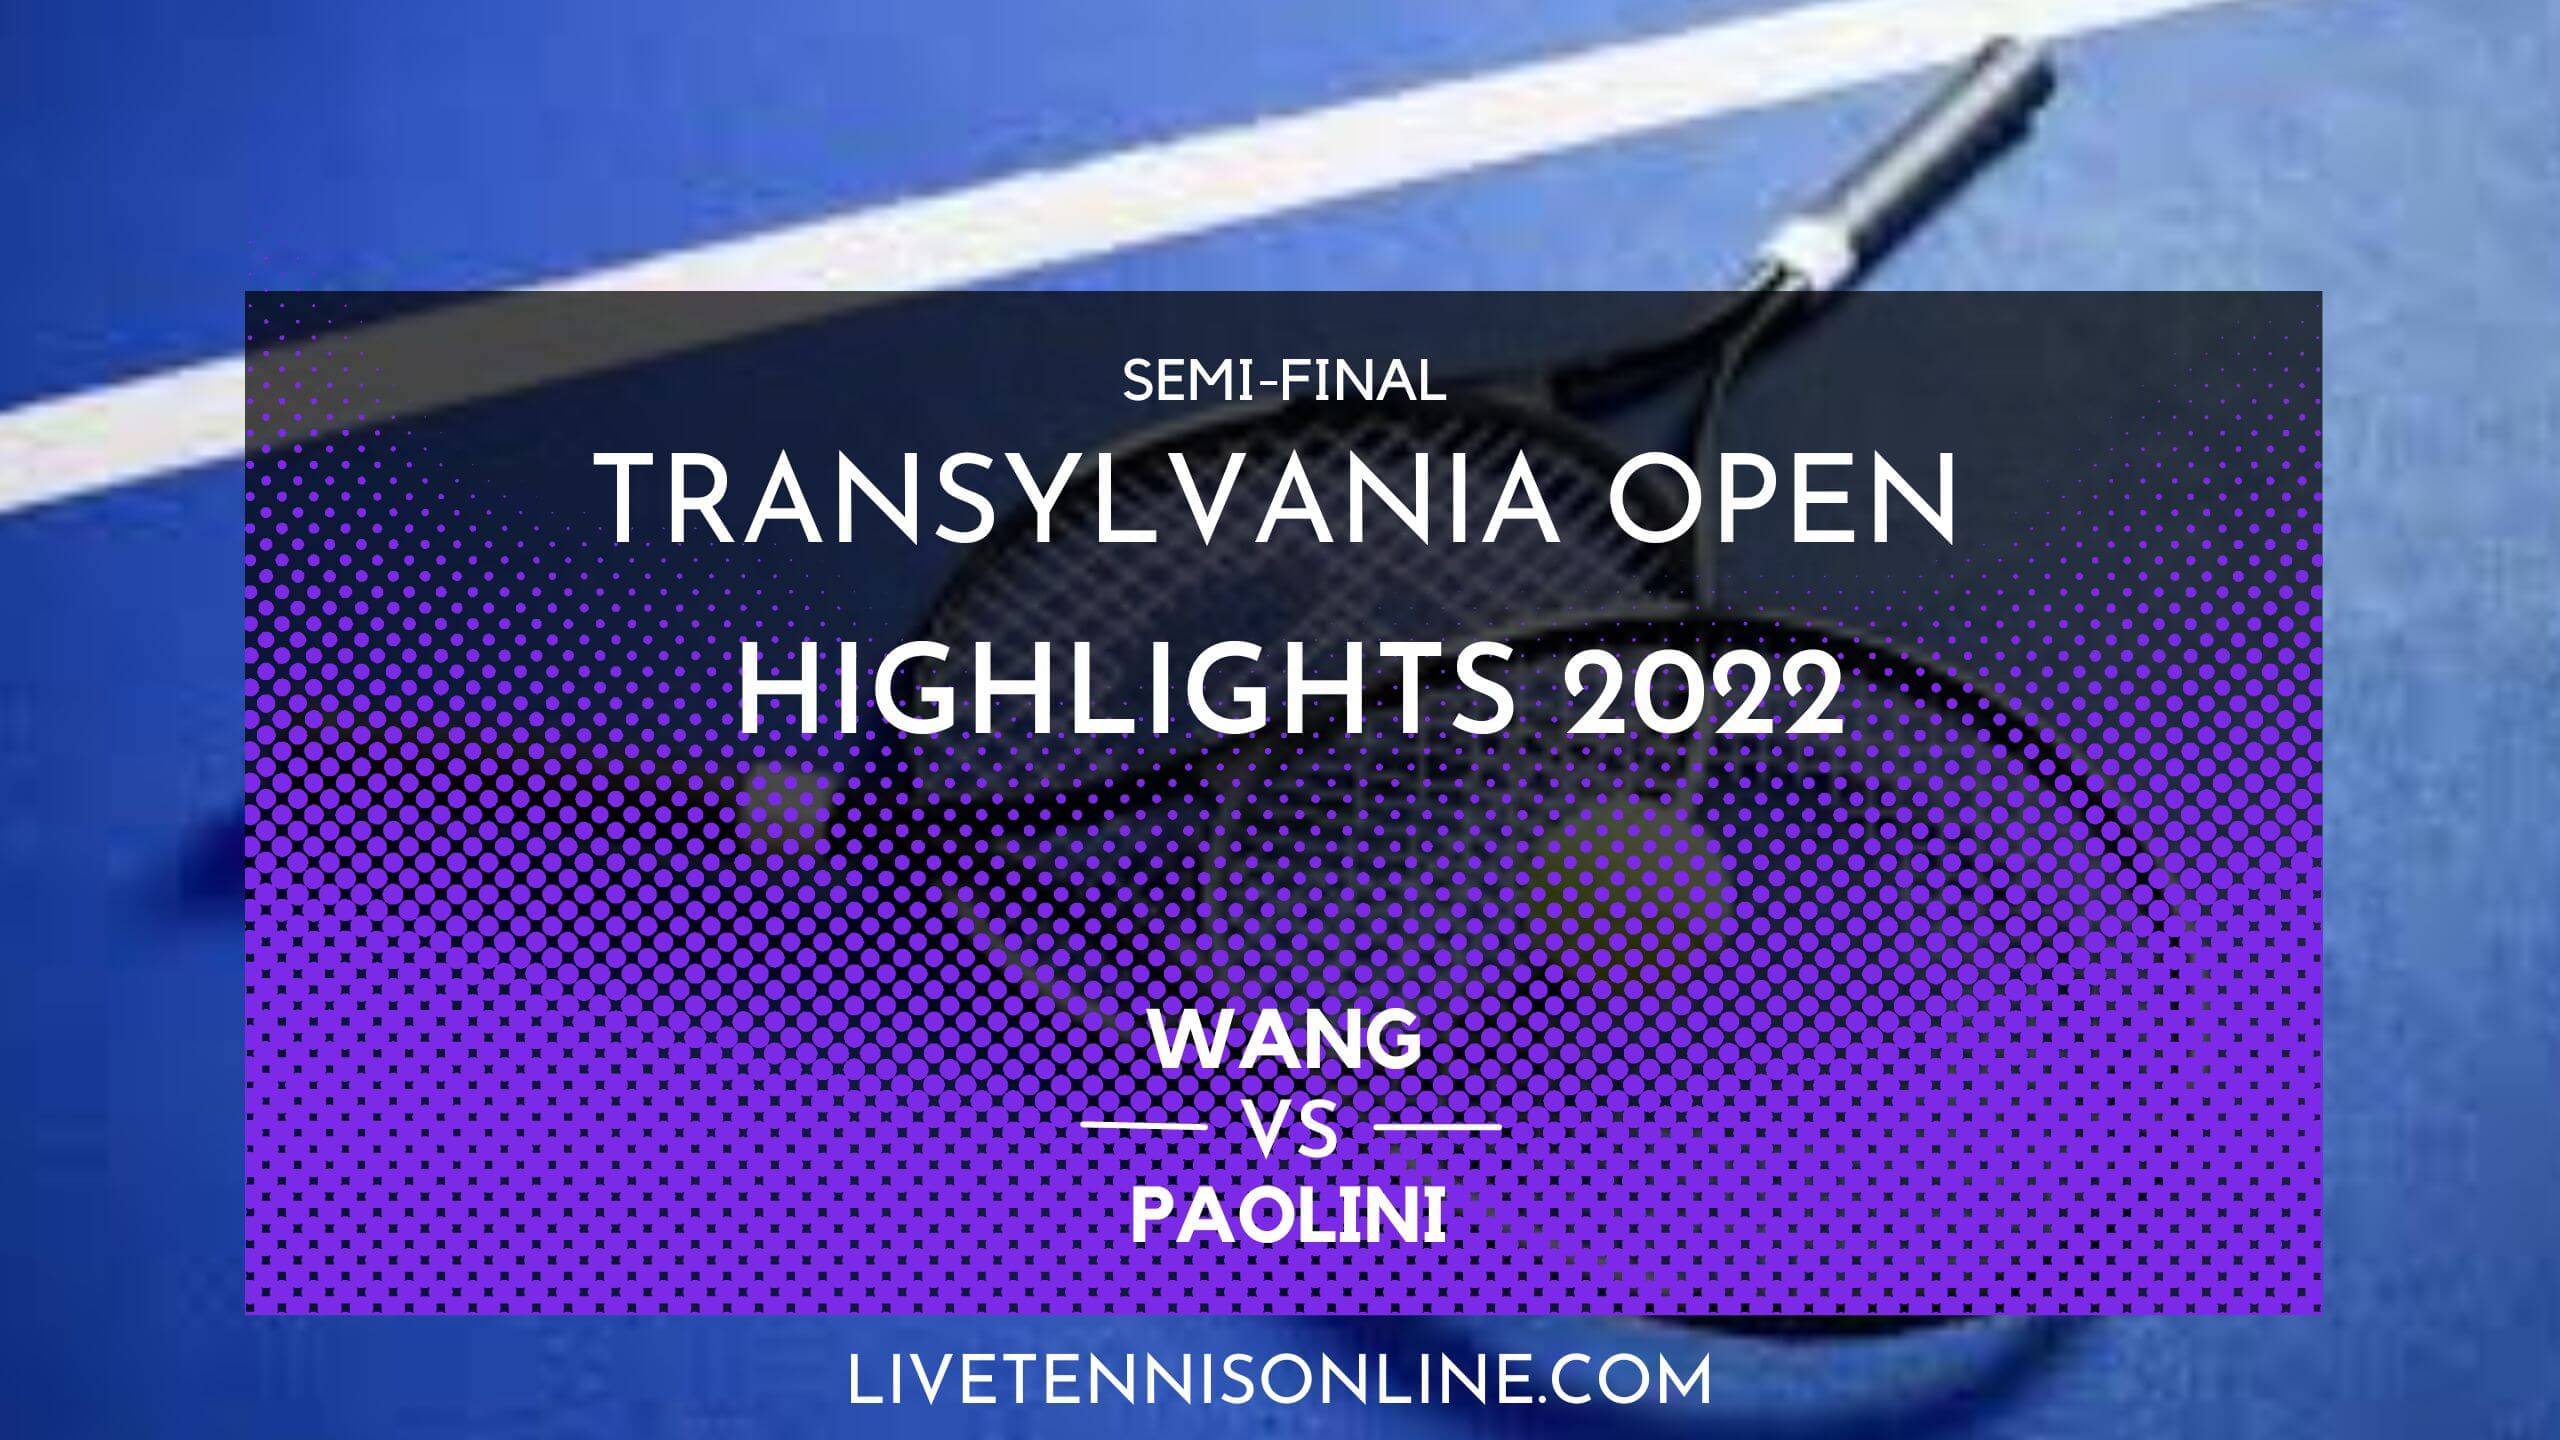 Wang Vs Paolini SF Highlights 2022 Transylvania Open